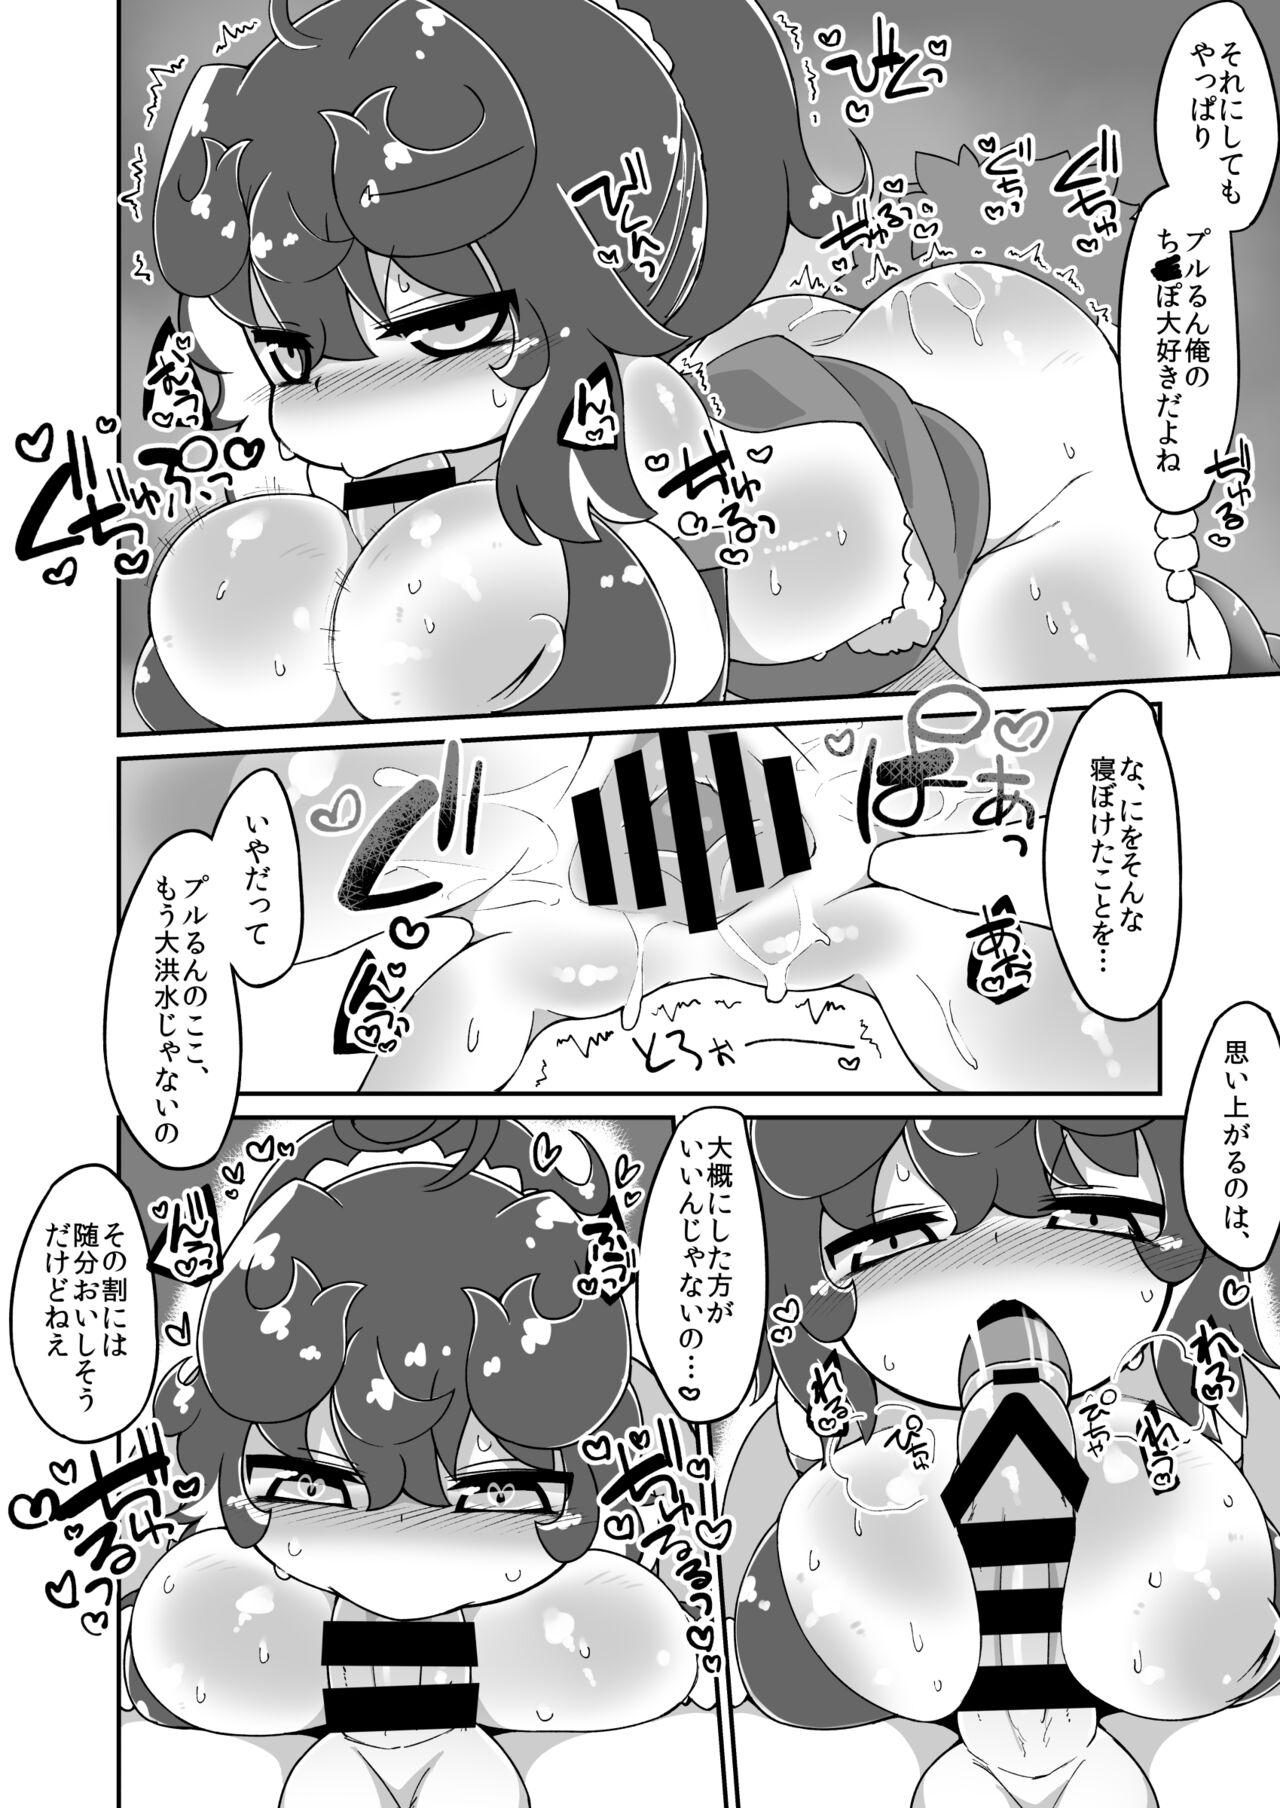 Slutty Christmas Prune Ecchi Manga - Bomber girl Cfnm - Page 2